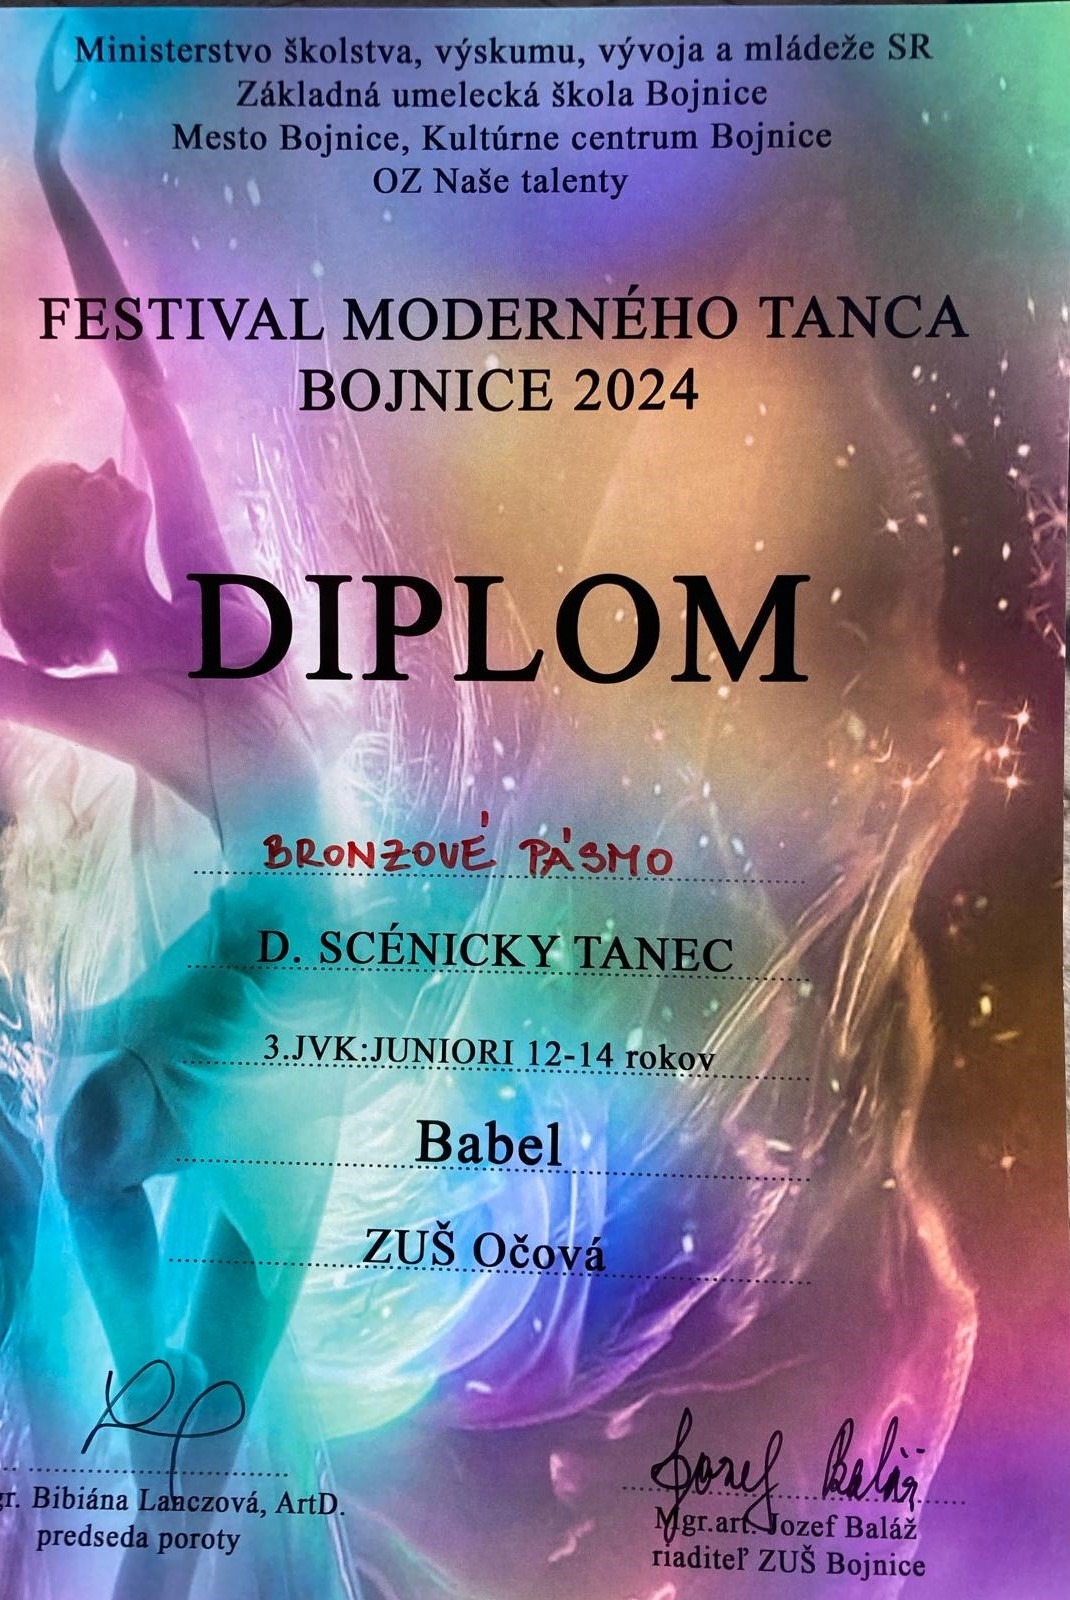 Festival moderného tanca 2024 Bojnice - Obrázok 1